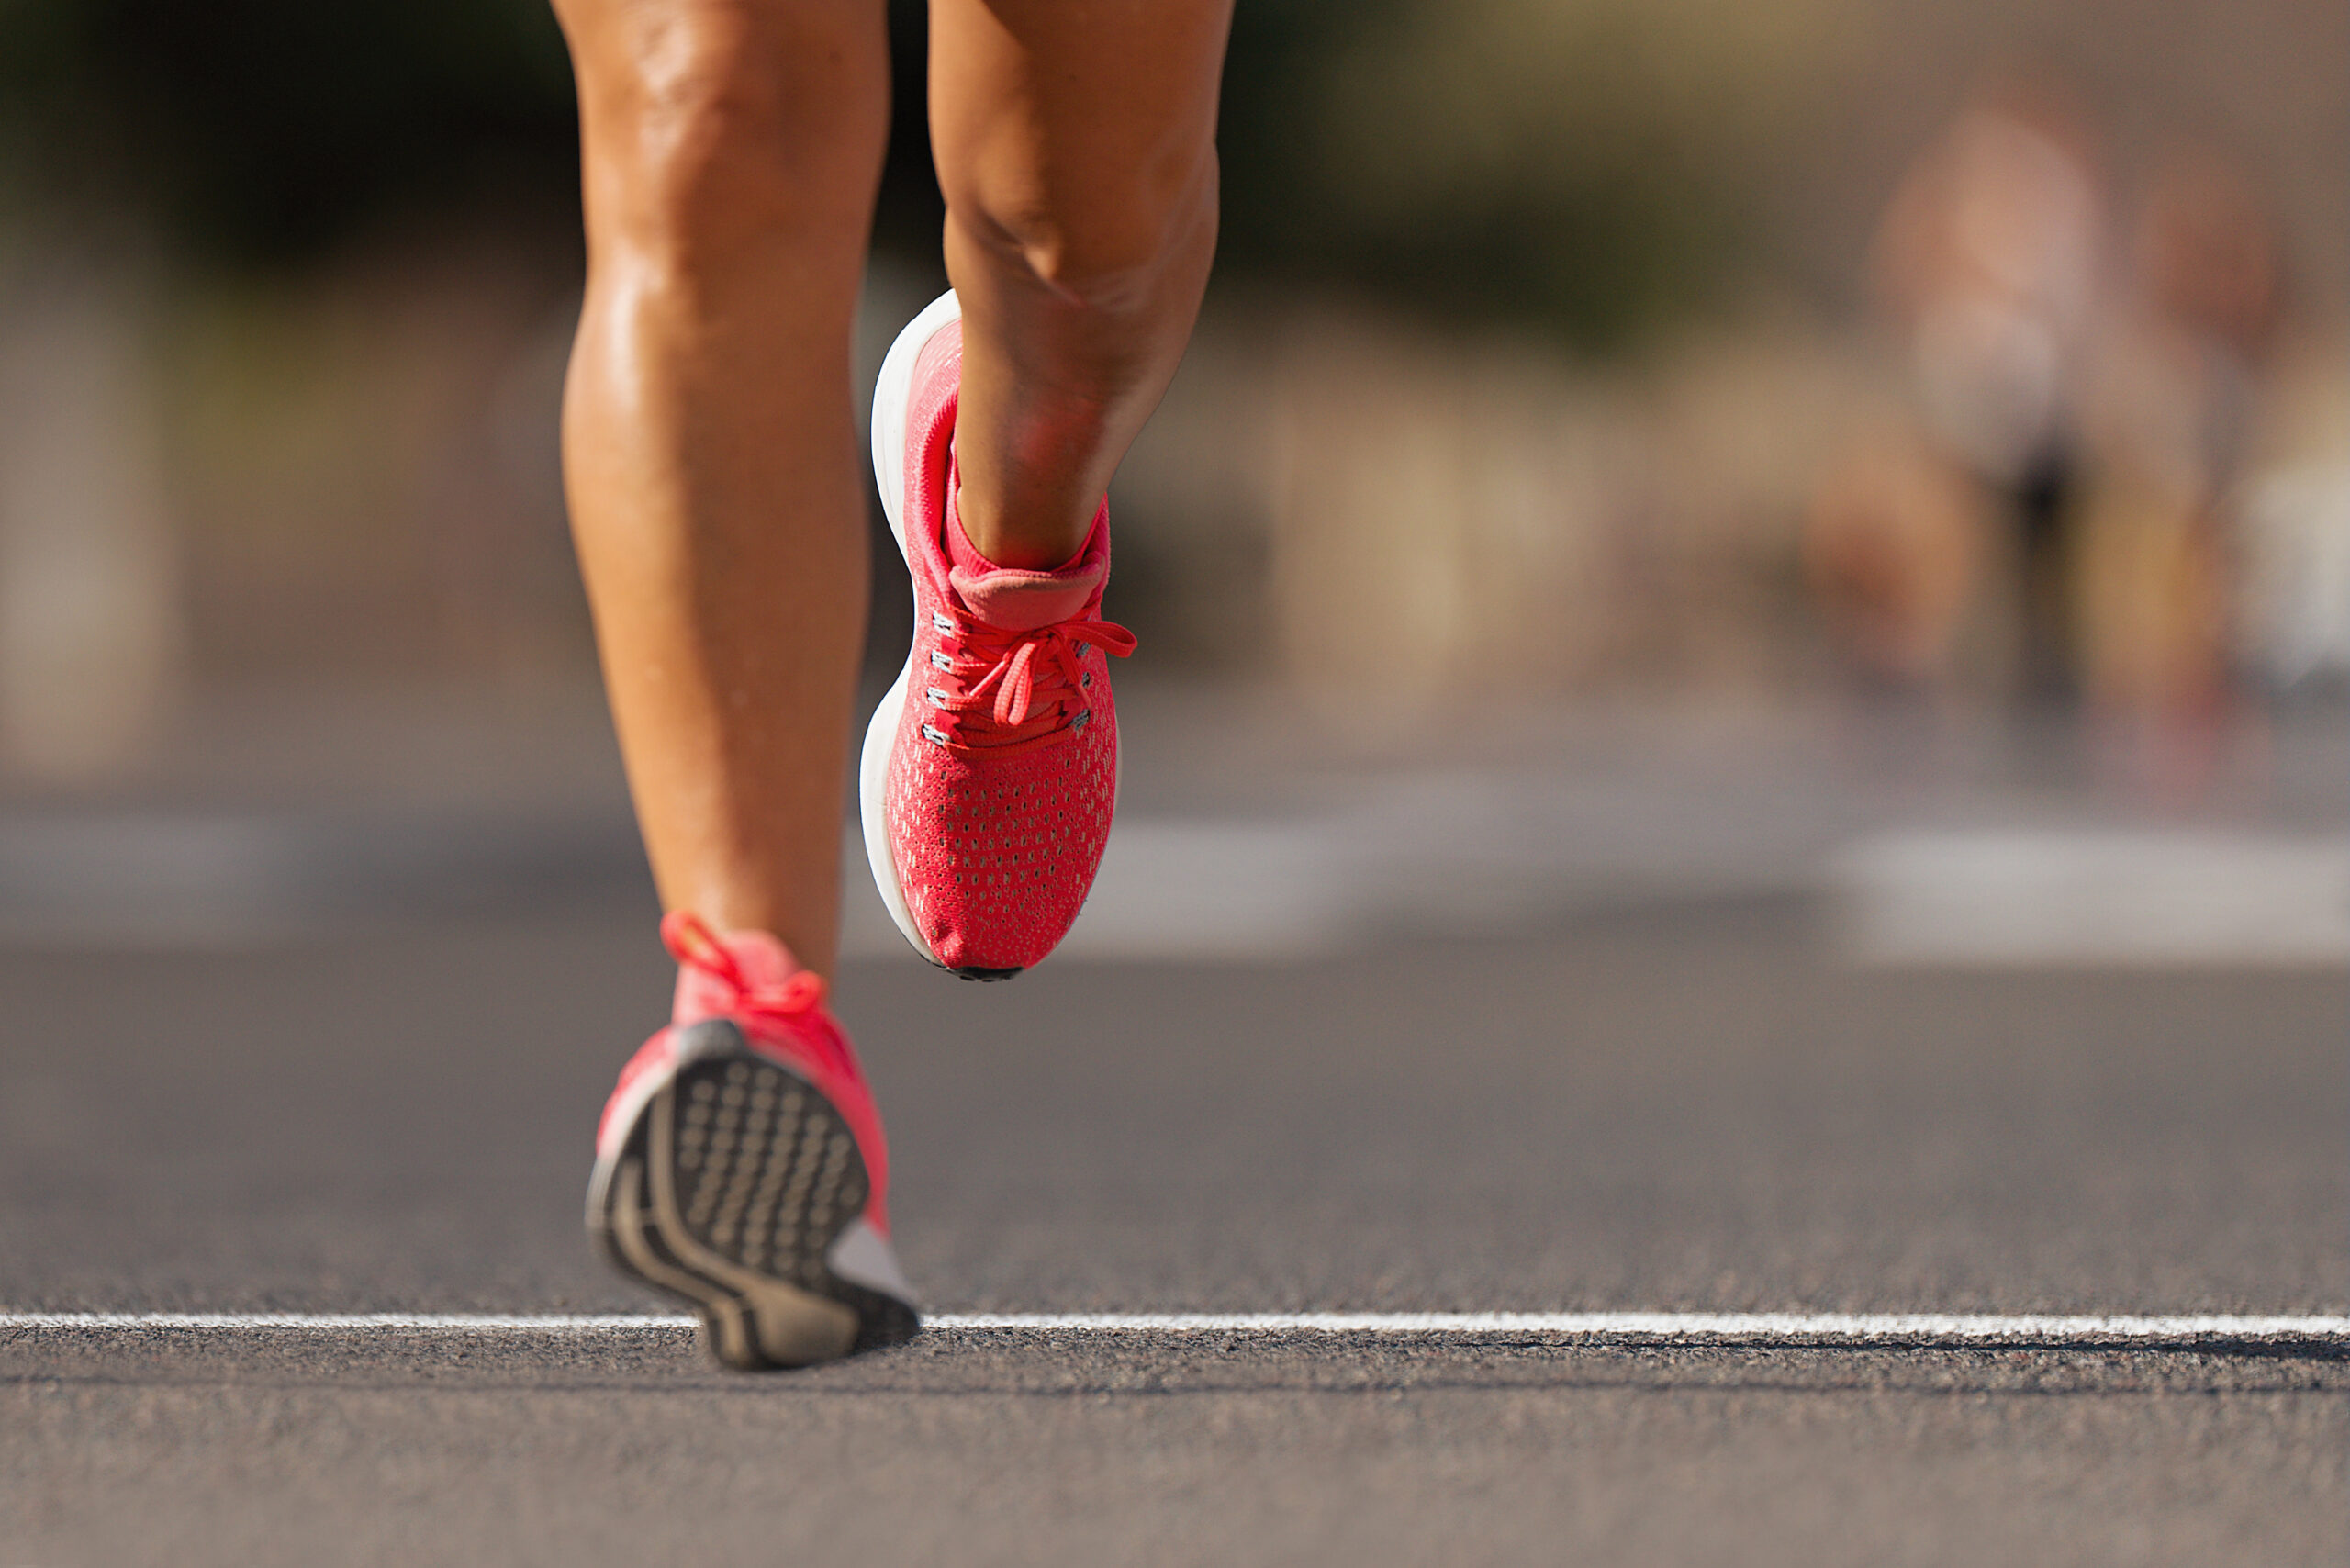 athlete runner feet running on road close up on shoe , marathon